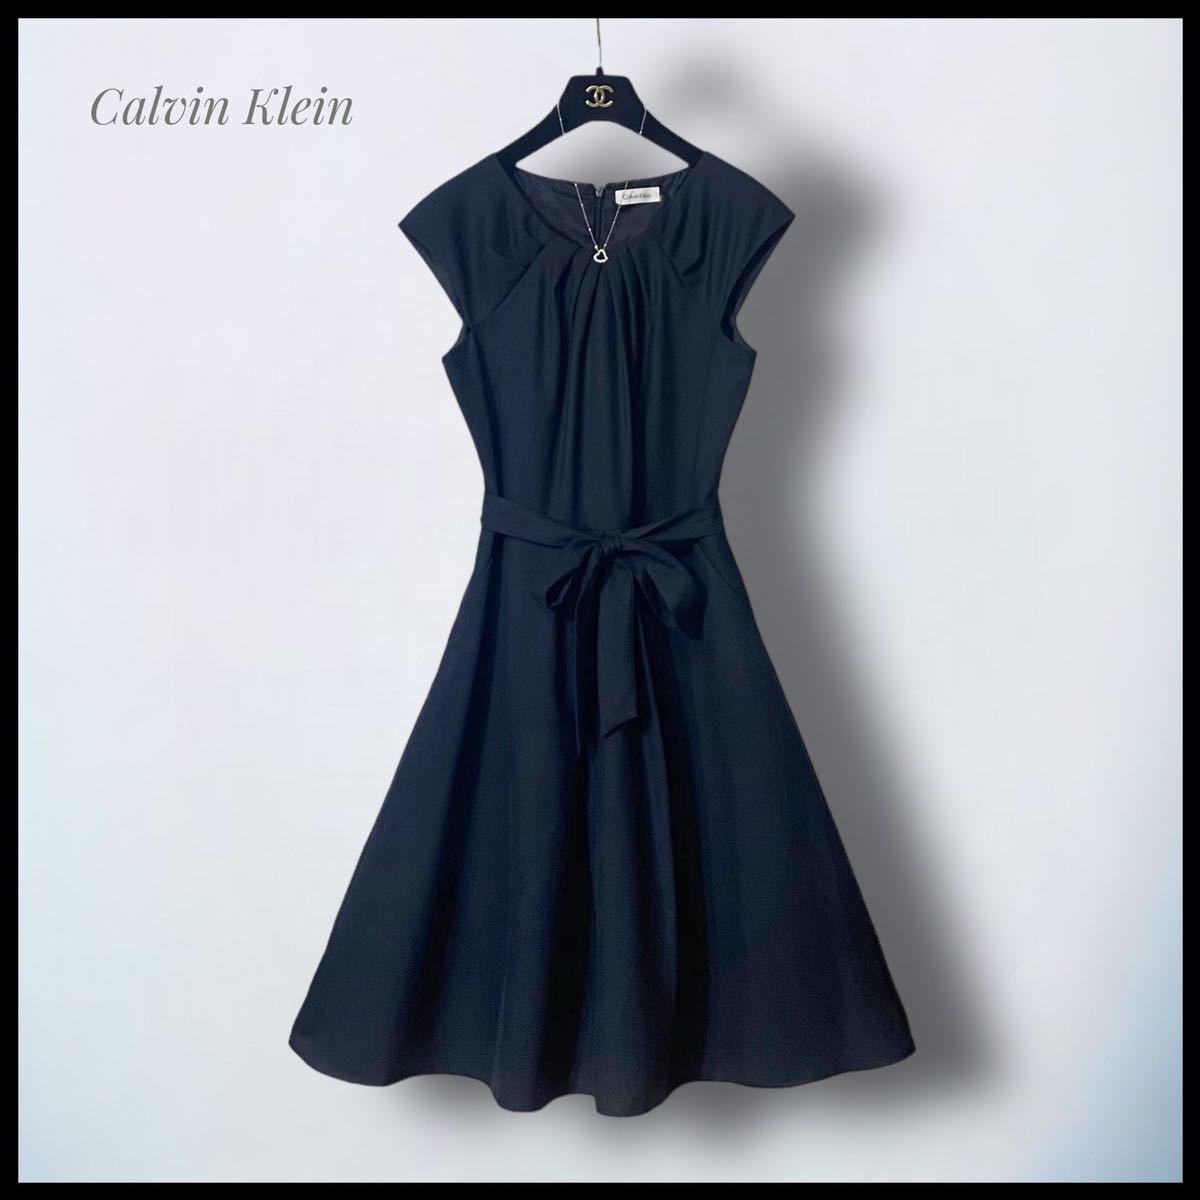 【Calvin Klein】 ウエストリボン フレアワンピース ノースリーブワンピース ブラック 黒 カルバン・クライン L